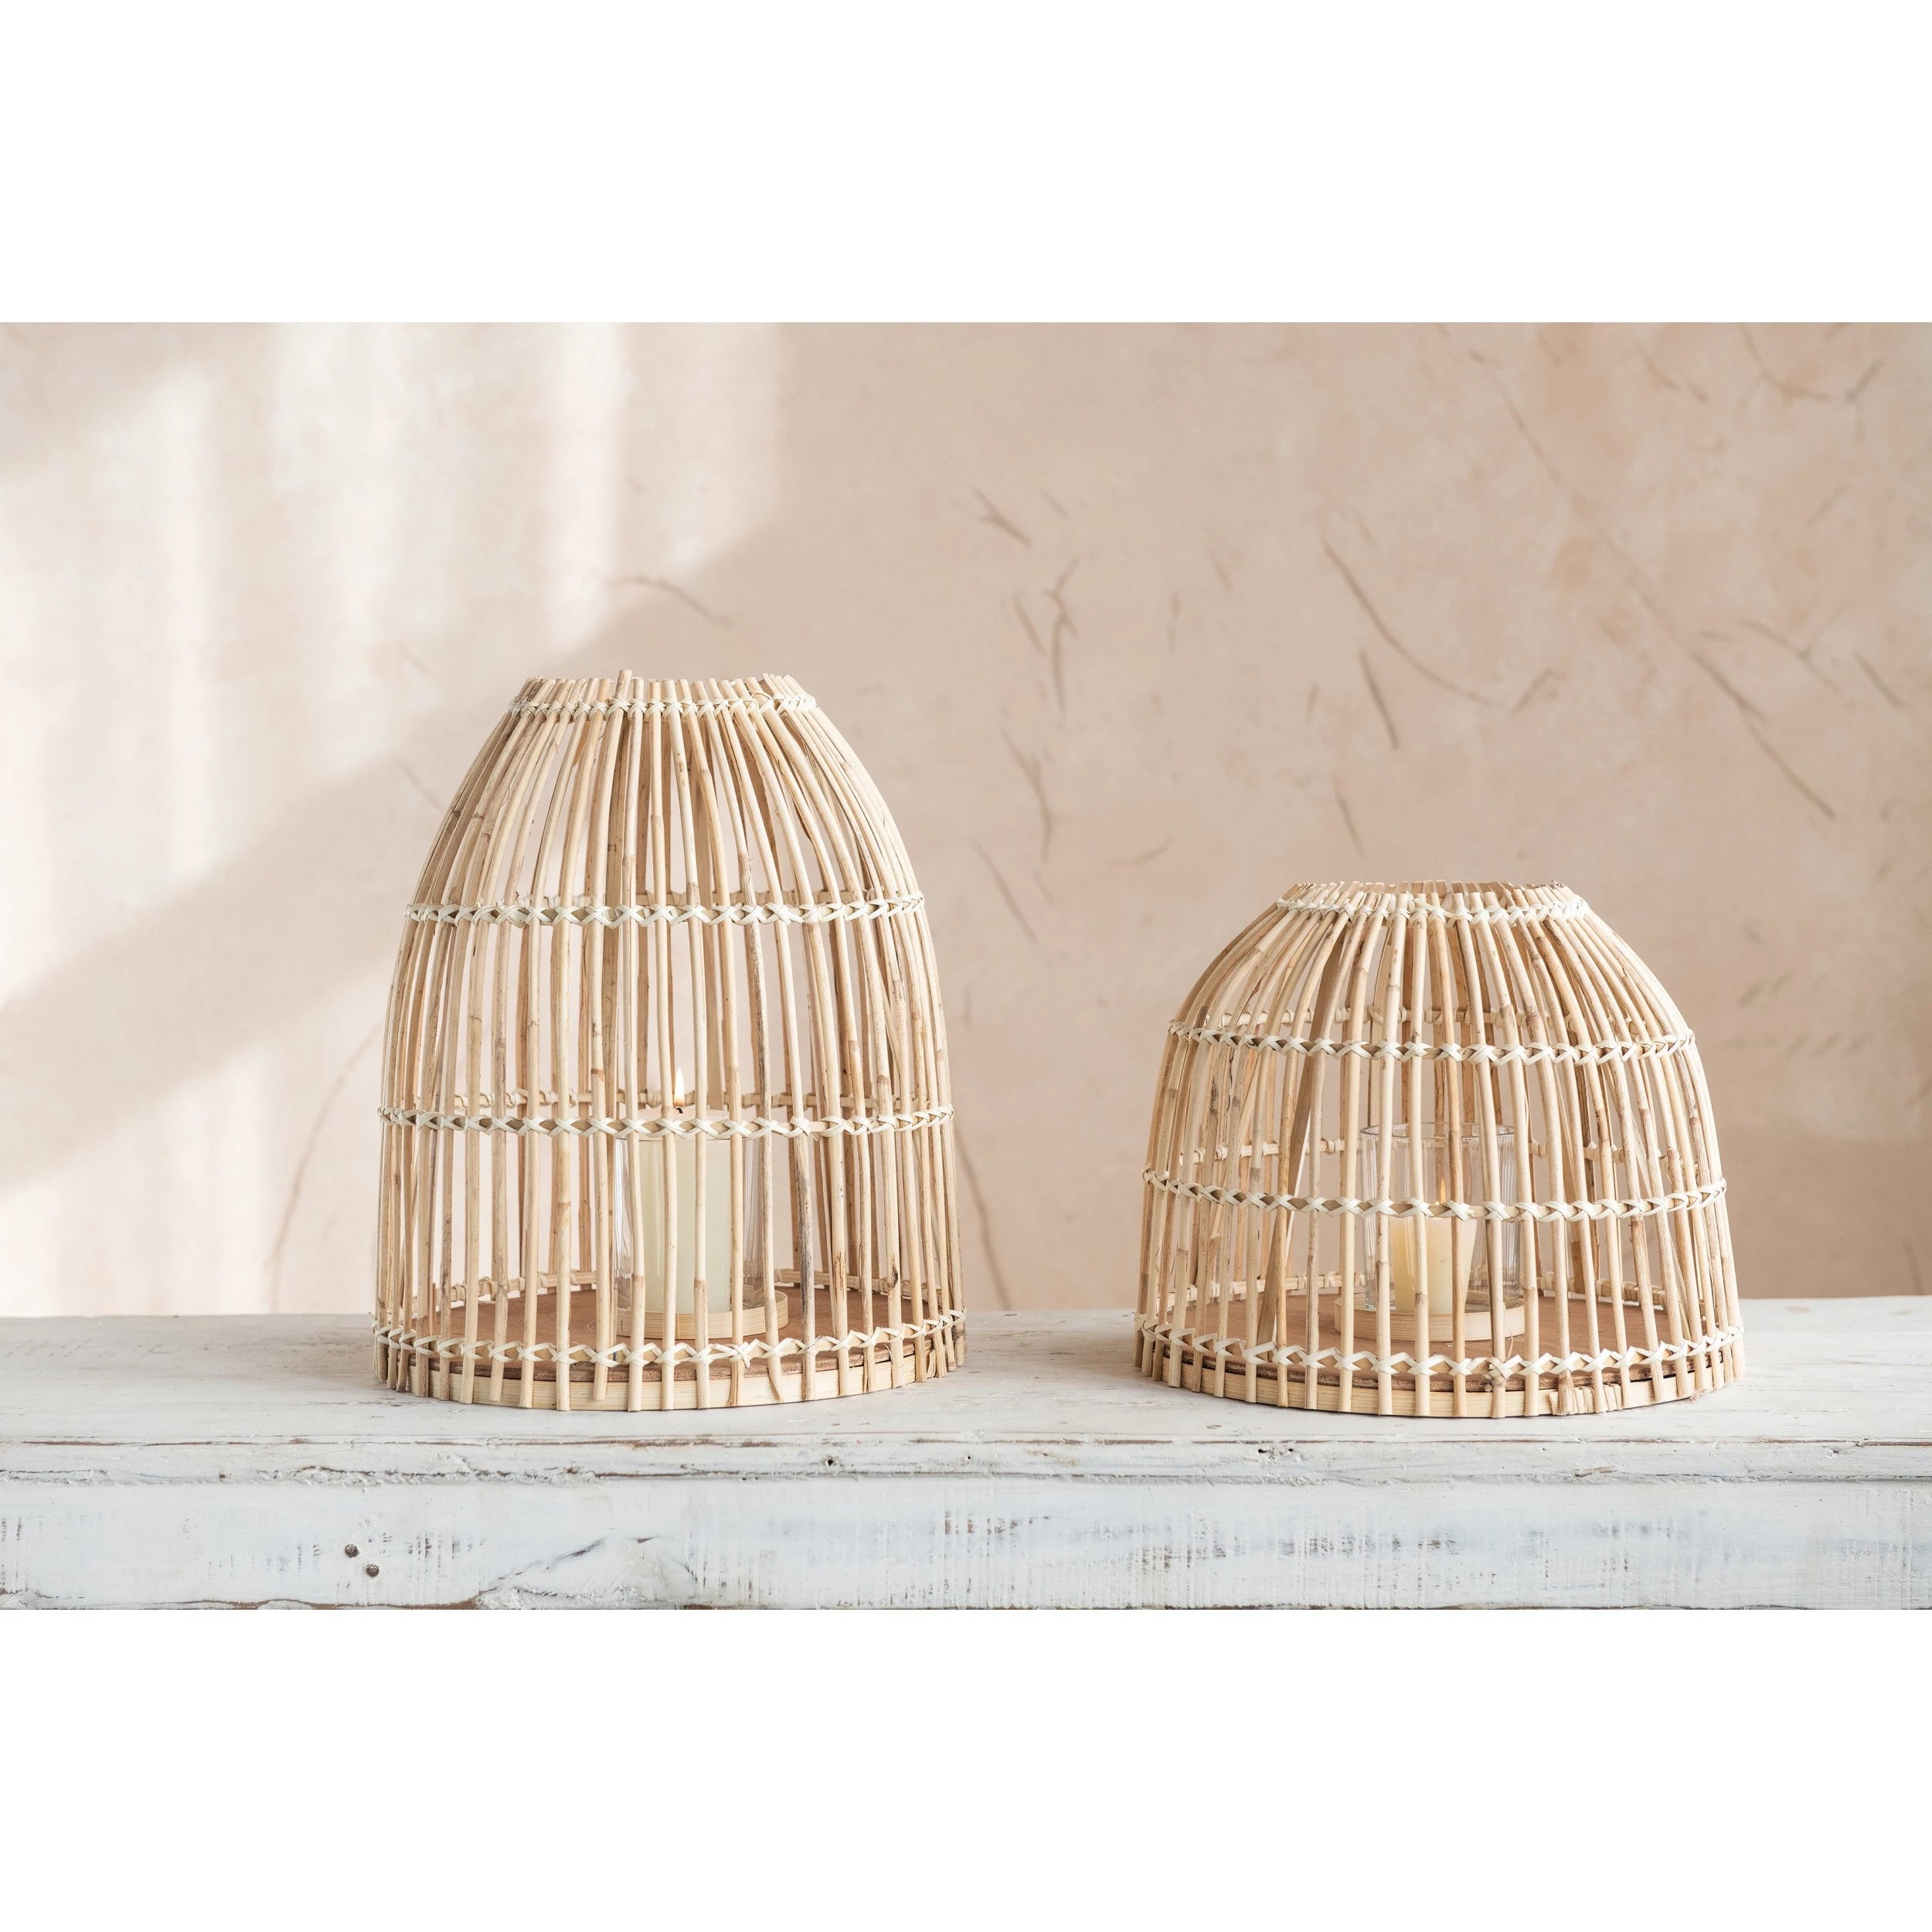 Bamboo Lanterns with Glass Inserts, Set of 2 Sizes - Image 3